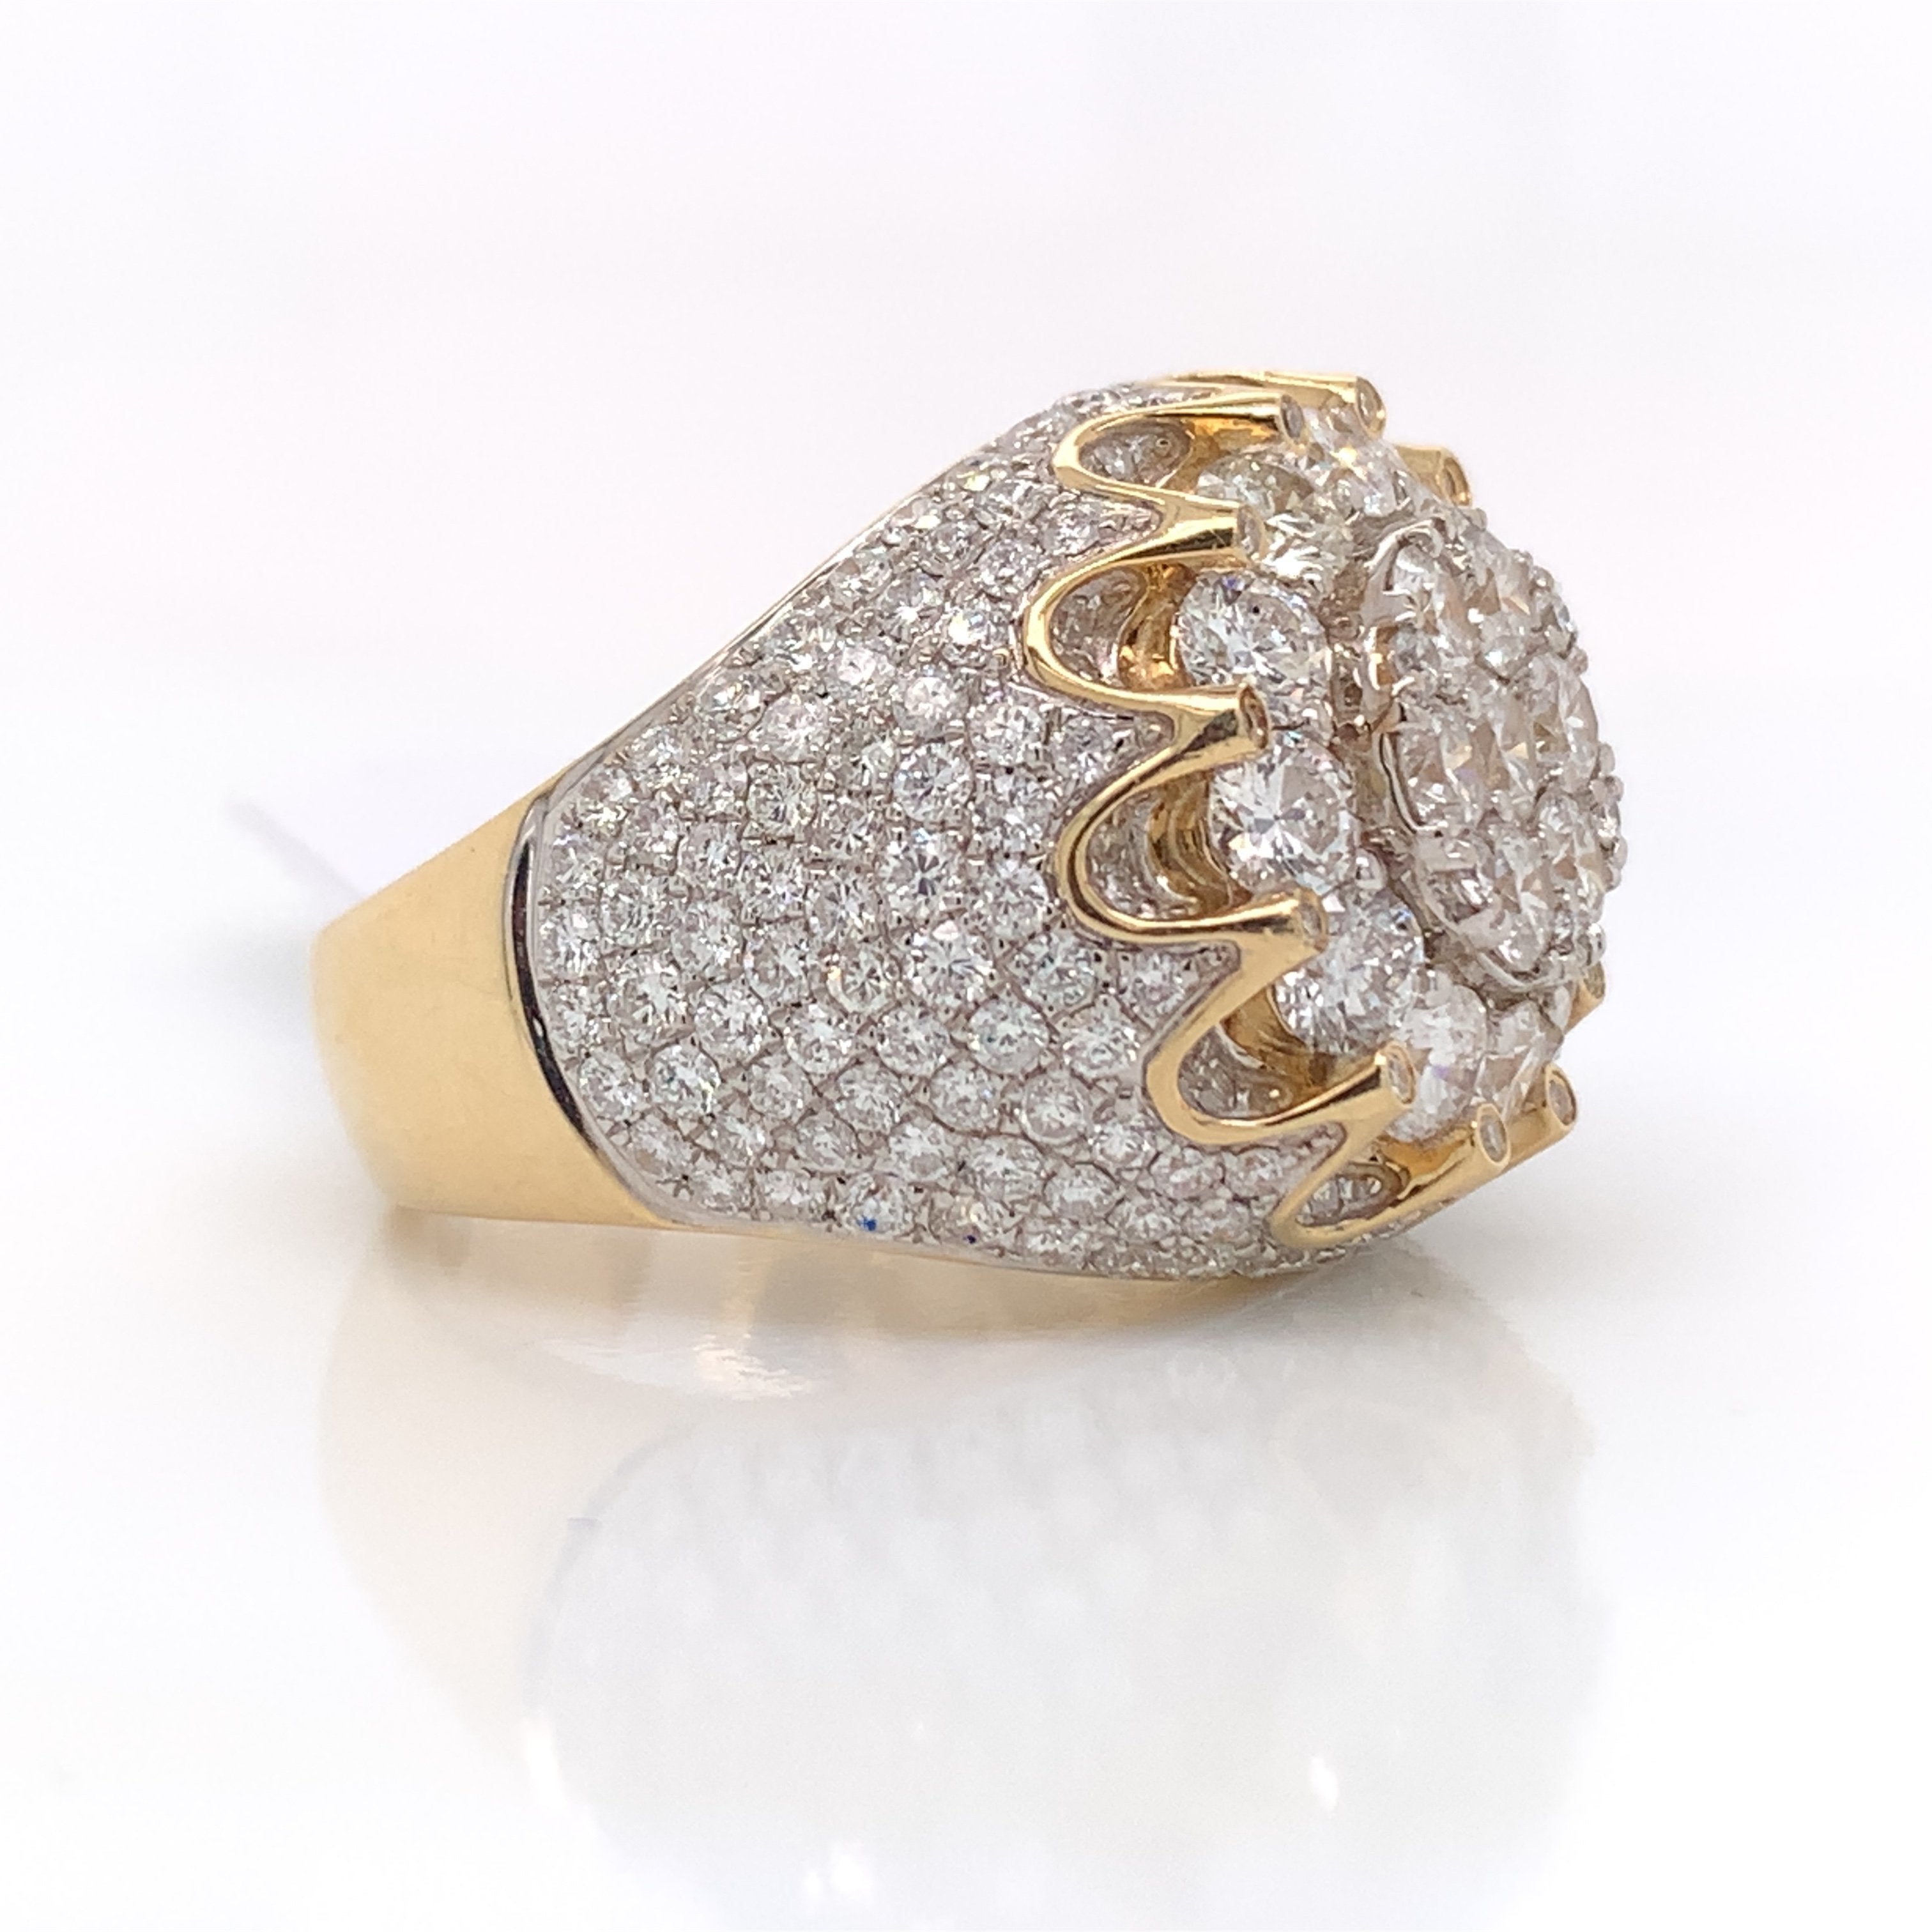 5.00 CT. Diamond Ring 10KT Gold - White Carat Diamonds 